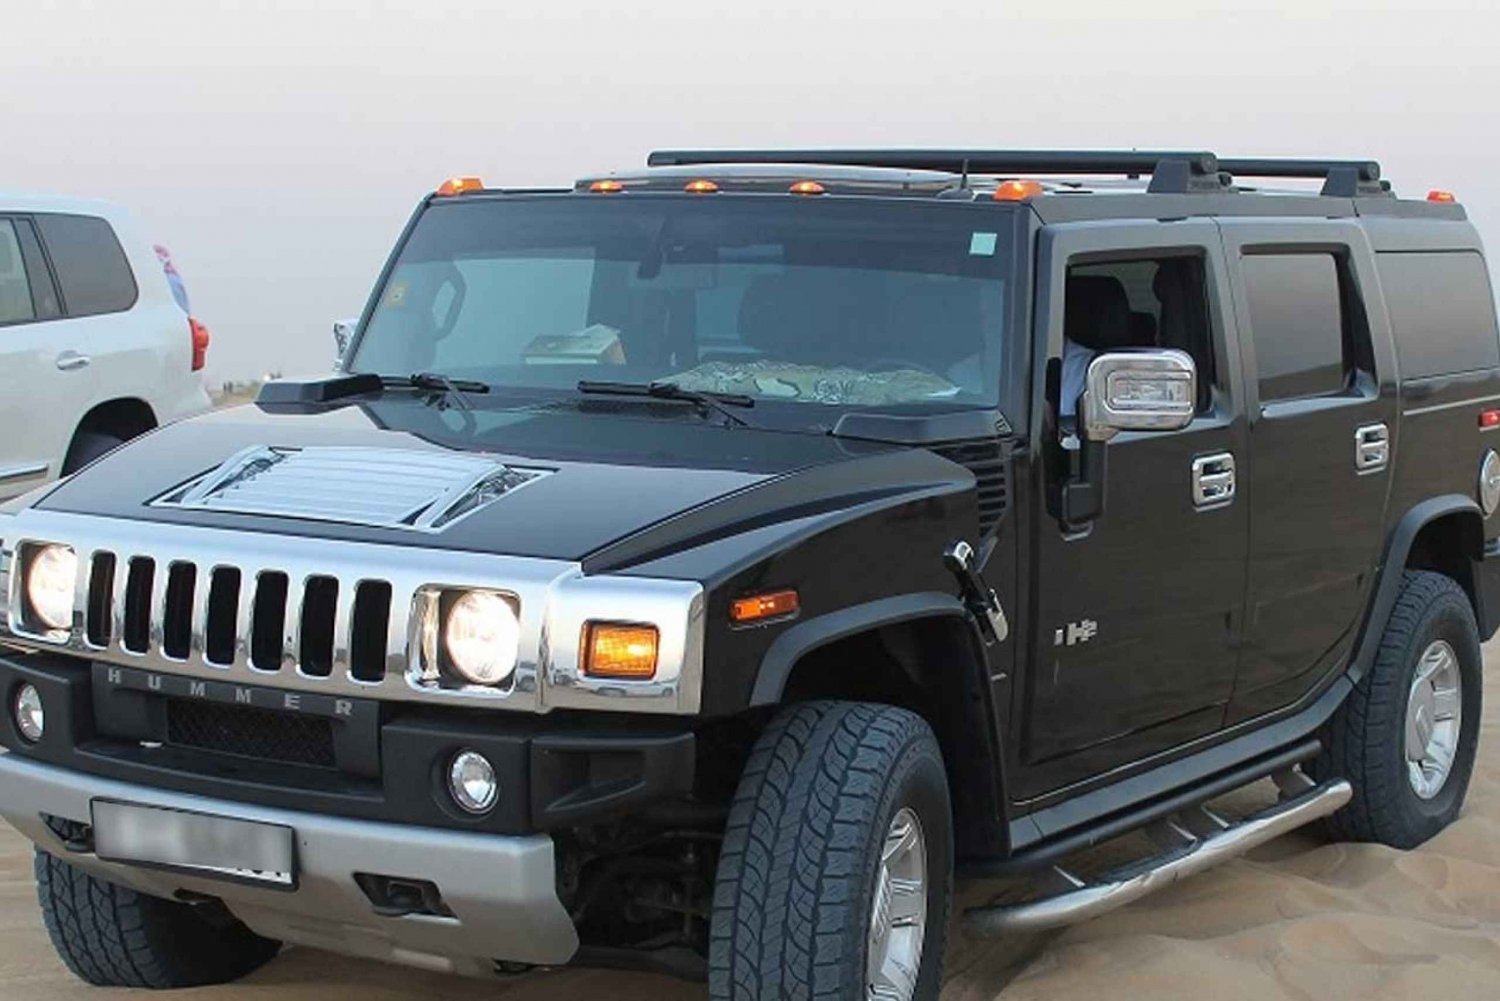 Exclusivo Hummer Desert Safari Dubai Private Basis